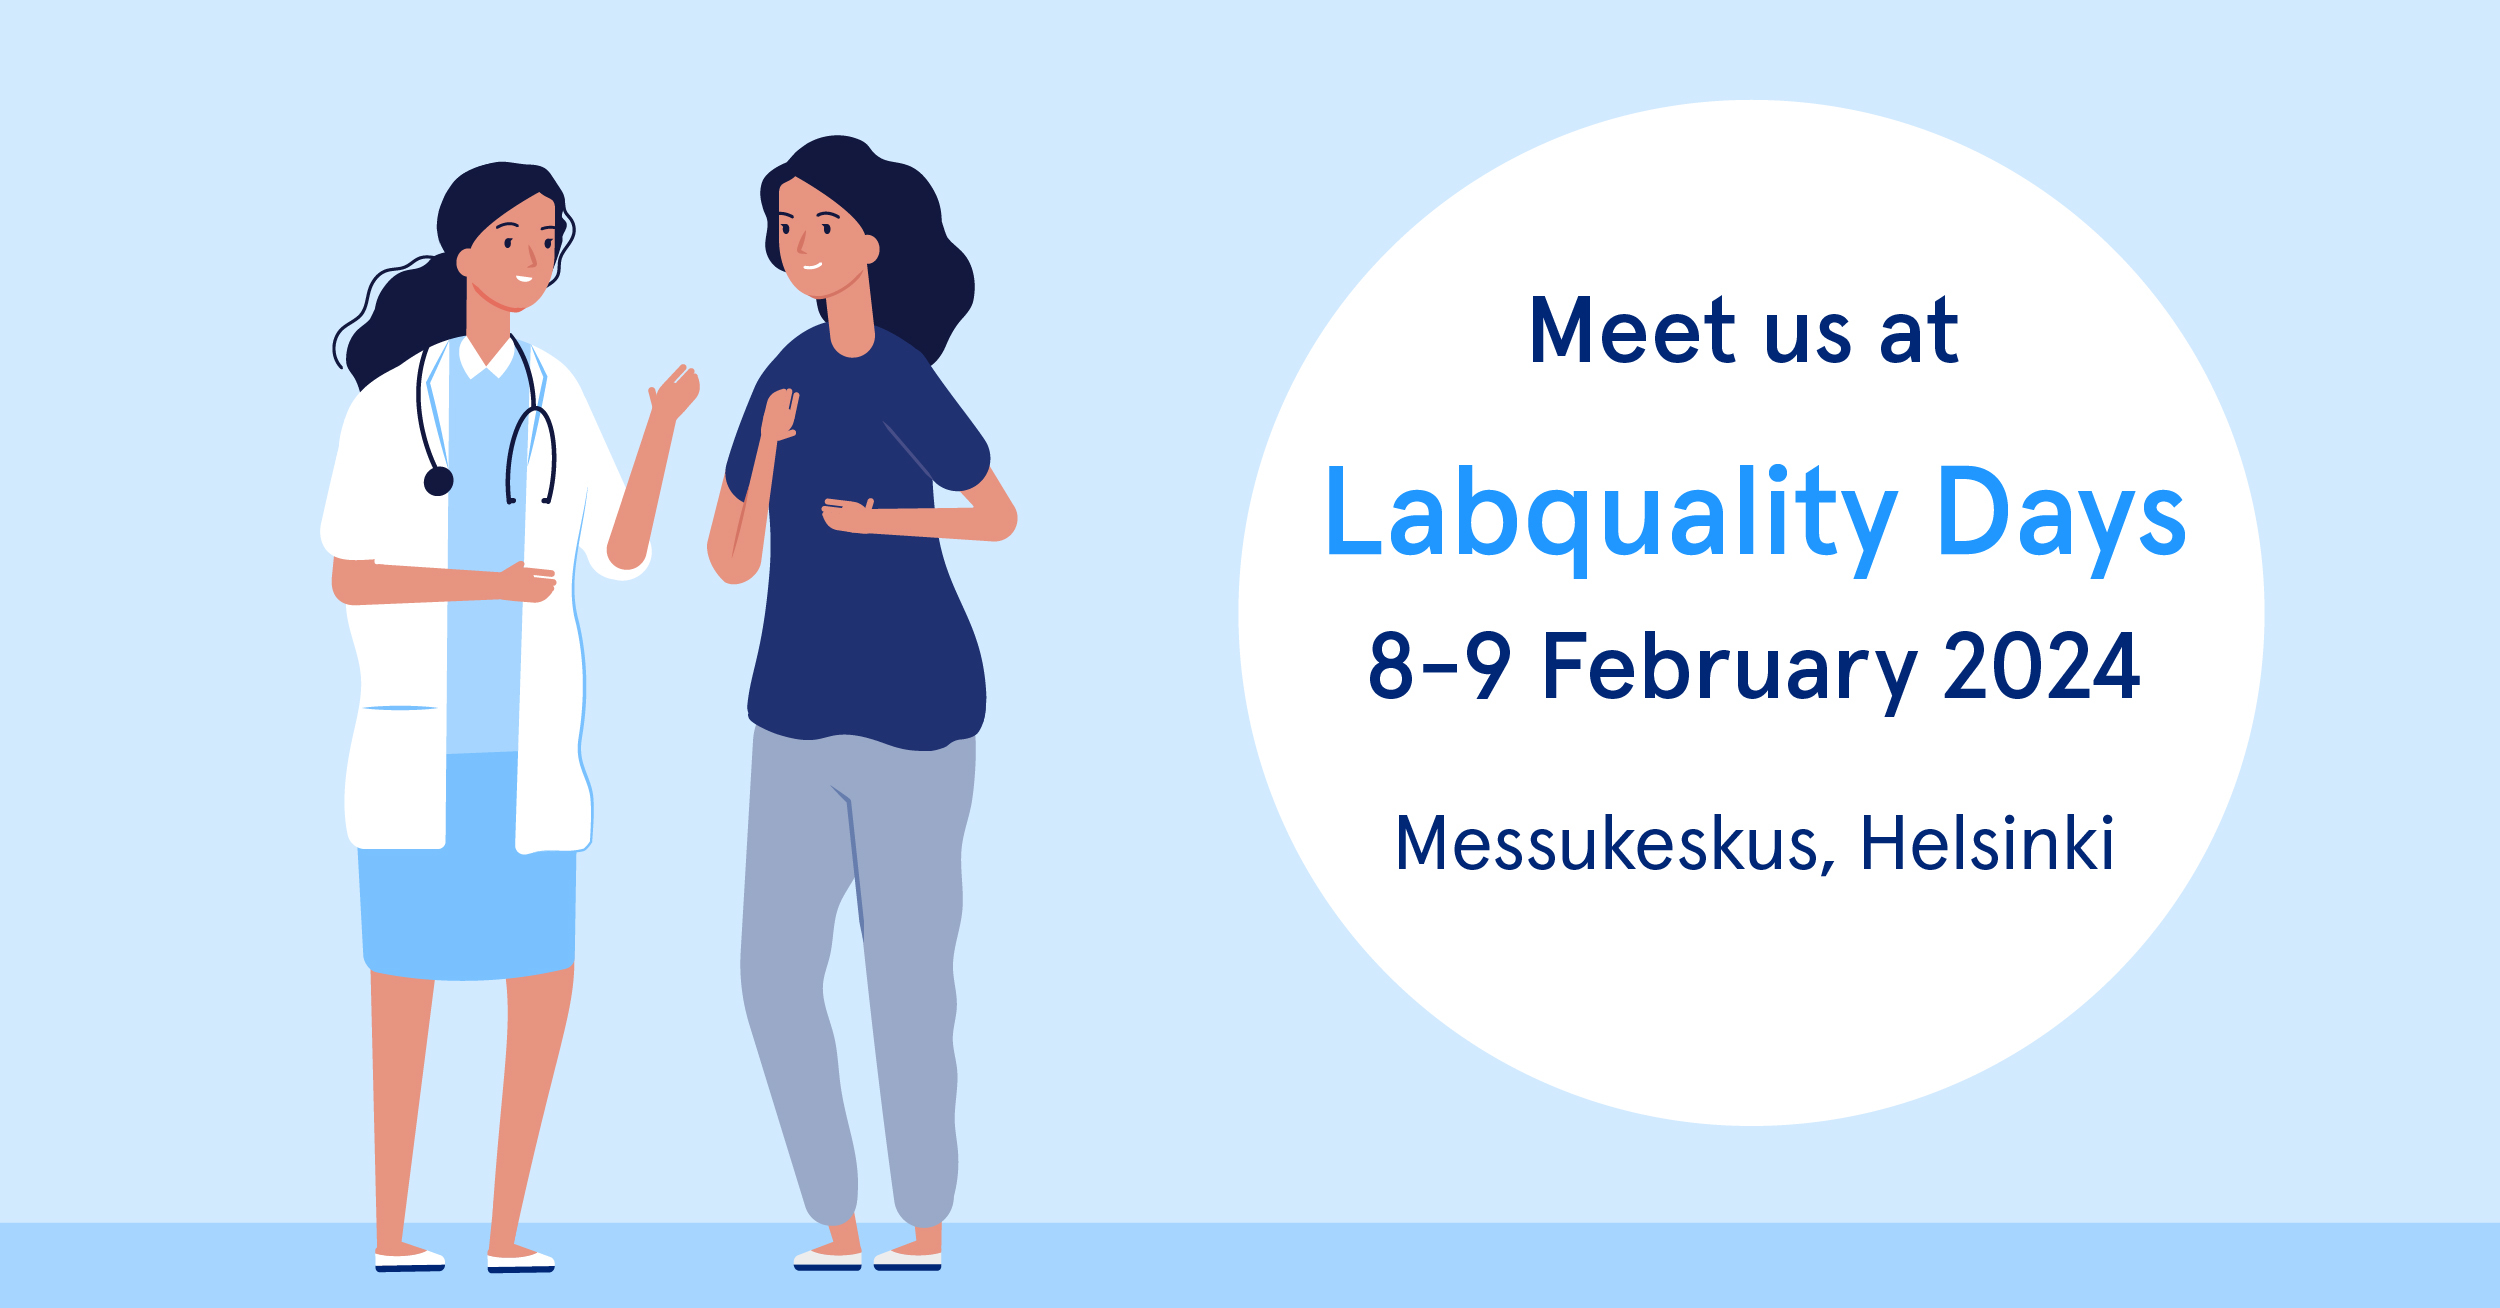 Meet us at Labquality Days 2024!